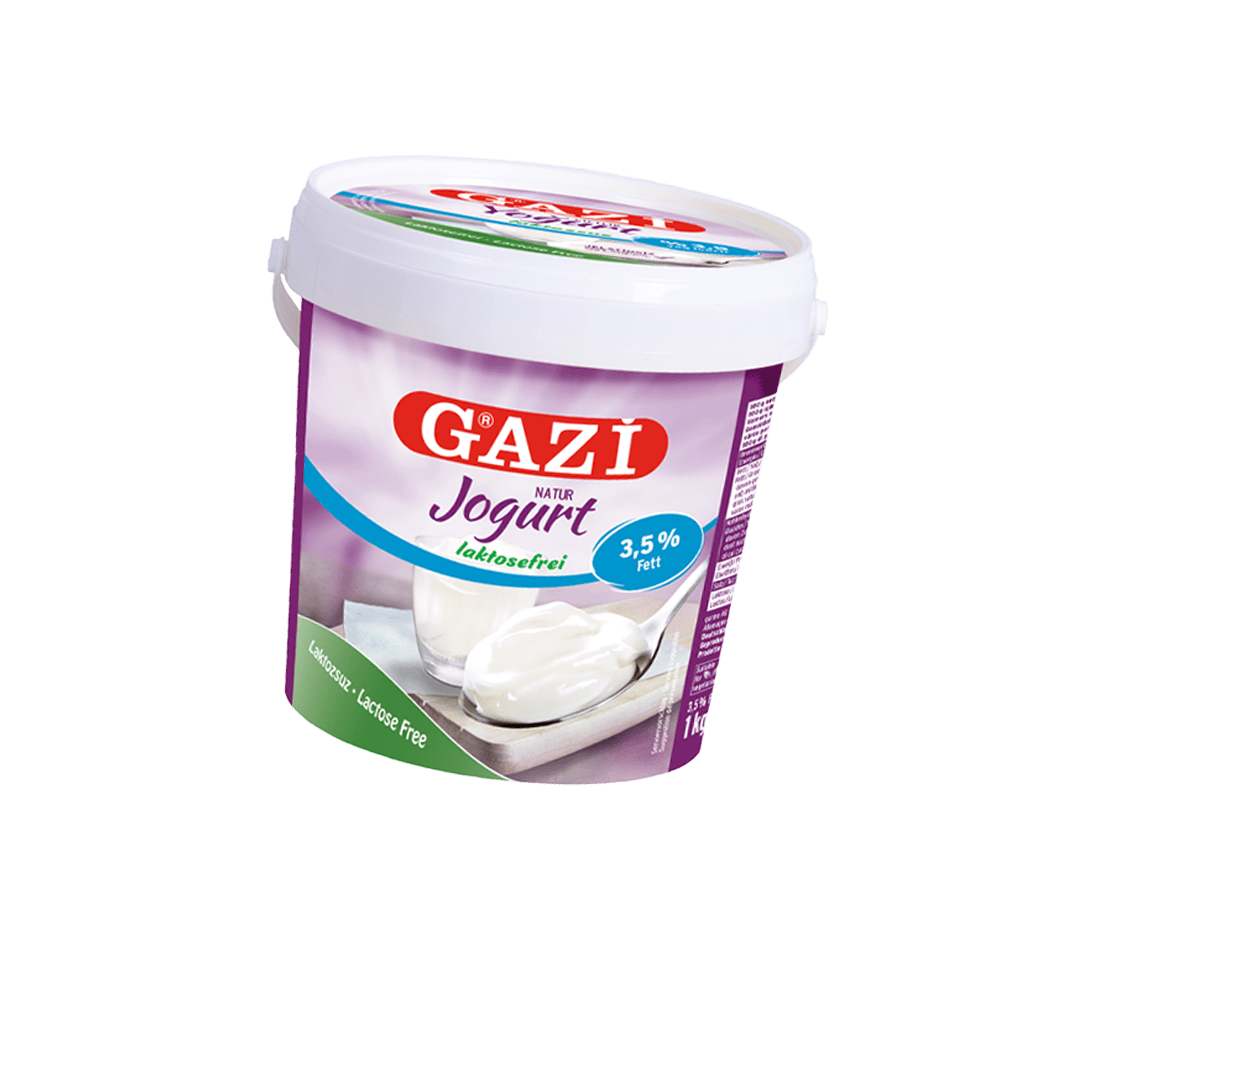 GAZi Joghurt Laktosefrei Verlinkung Welt